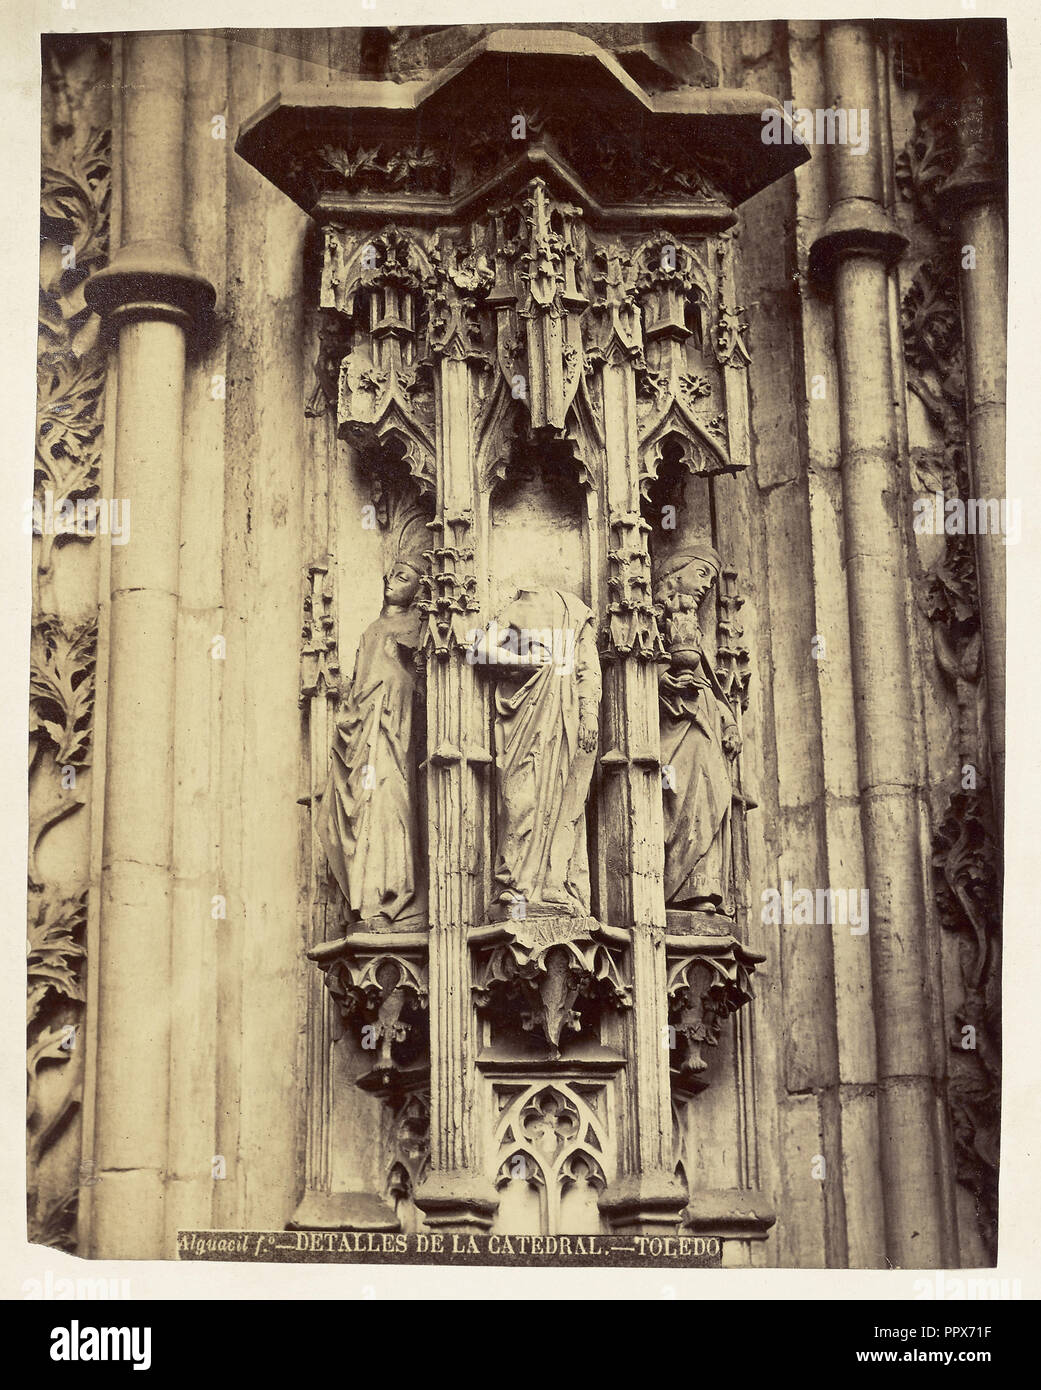 Detalles de la Catedral, Toledo; Casiano Alguacil, Spanish, 1832 - 1914, Toledo, Spain; 1875; Albumen silver print Stock Photo